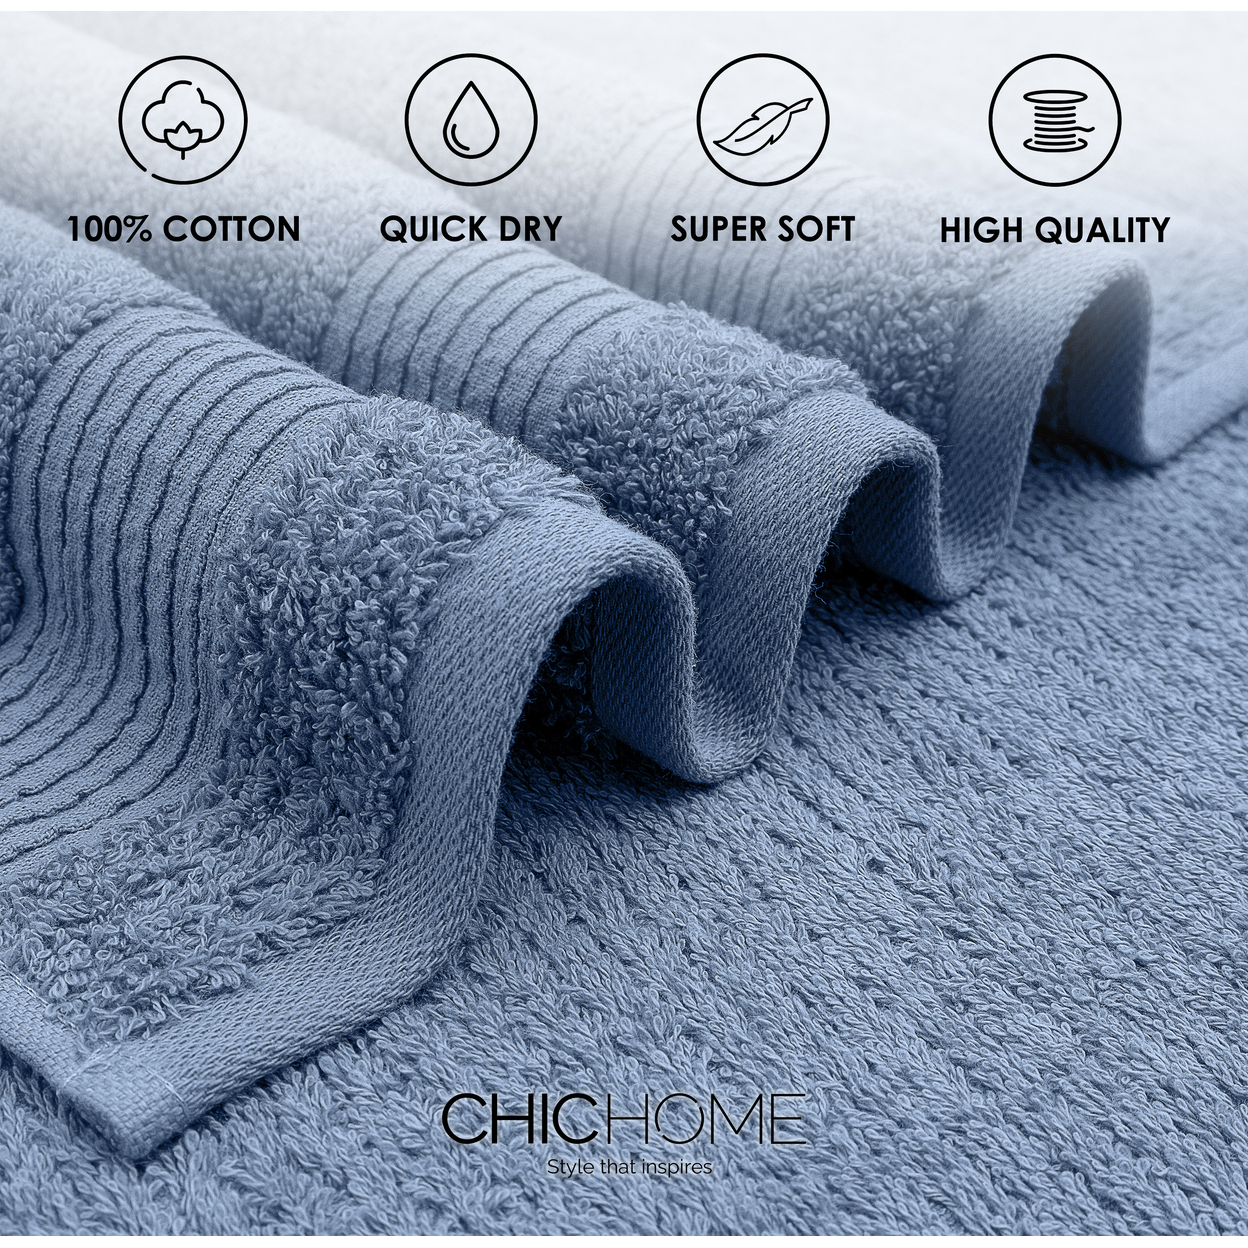 Chic Home Luxurious 2-Piece 100% Pure Turkish Cotton Bath Sheet Towels, 34x68, Jacquard Weave Design, OEKO-TEX Certified Set - Blue